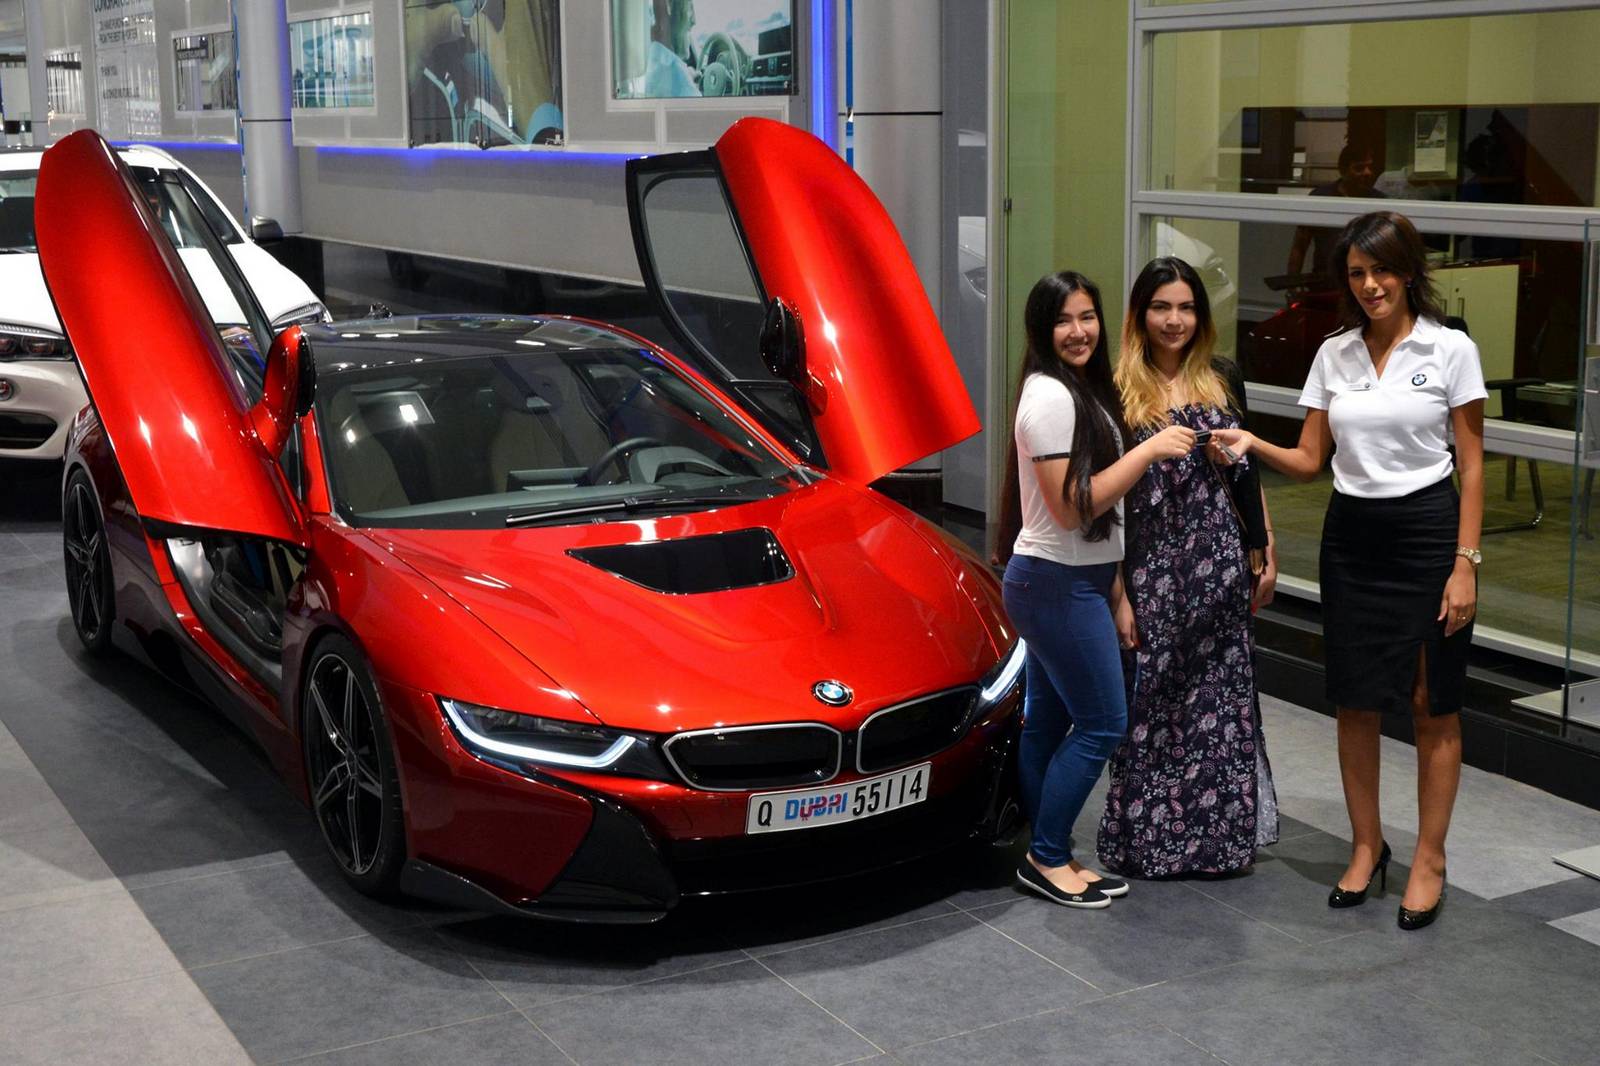 of 1 Red BMW i8 Built for Princess Al Hawi in Abu Dhabi - GTspirit